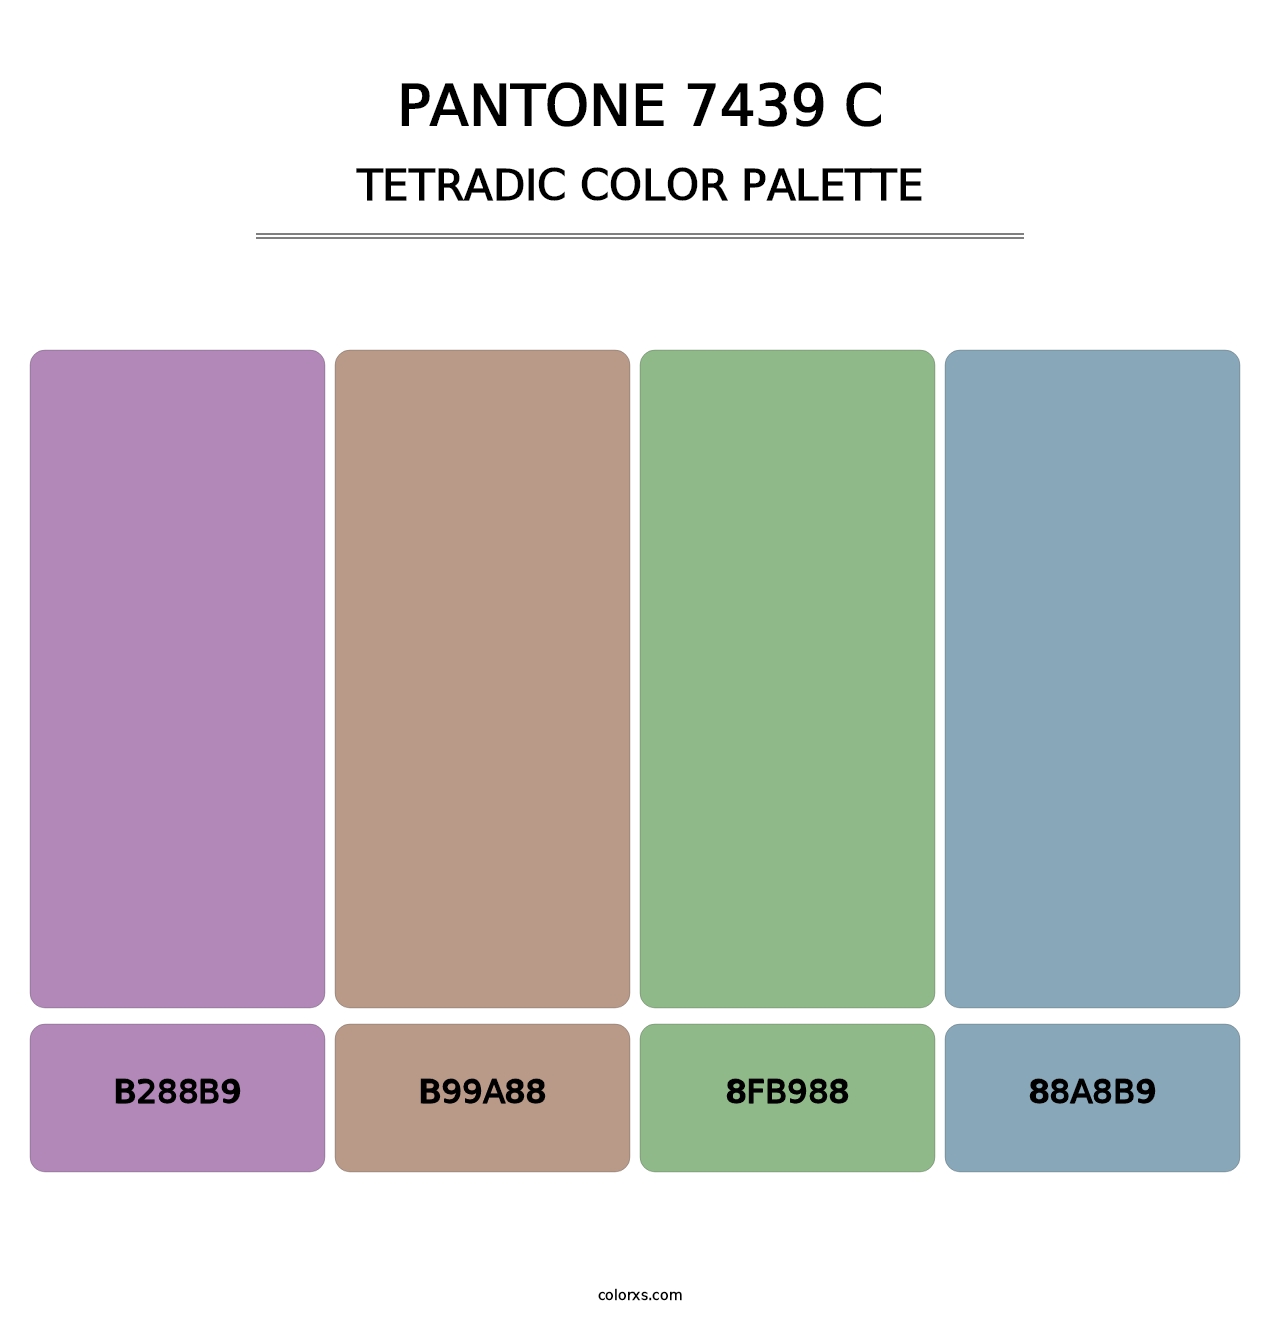 PANTONE 7439 C - Tetradic Color Palette